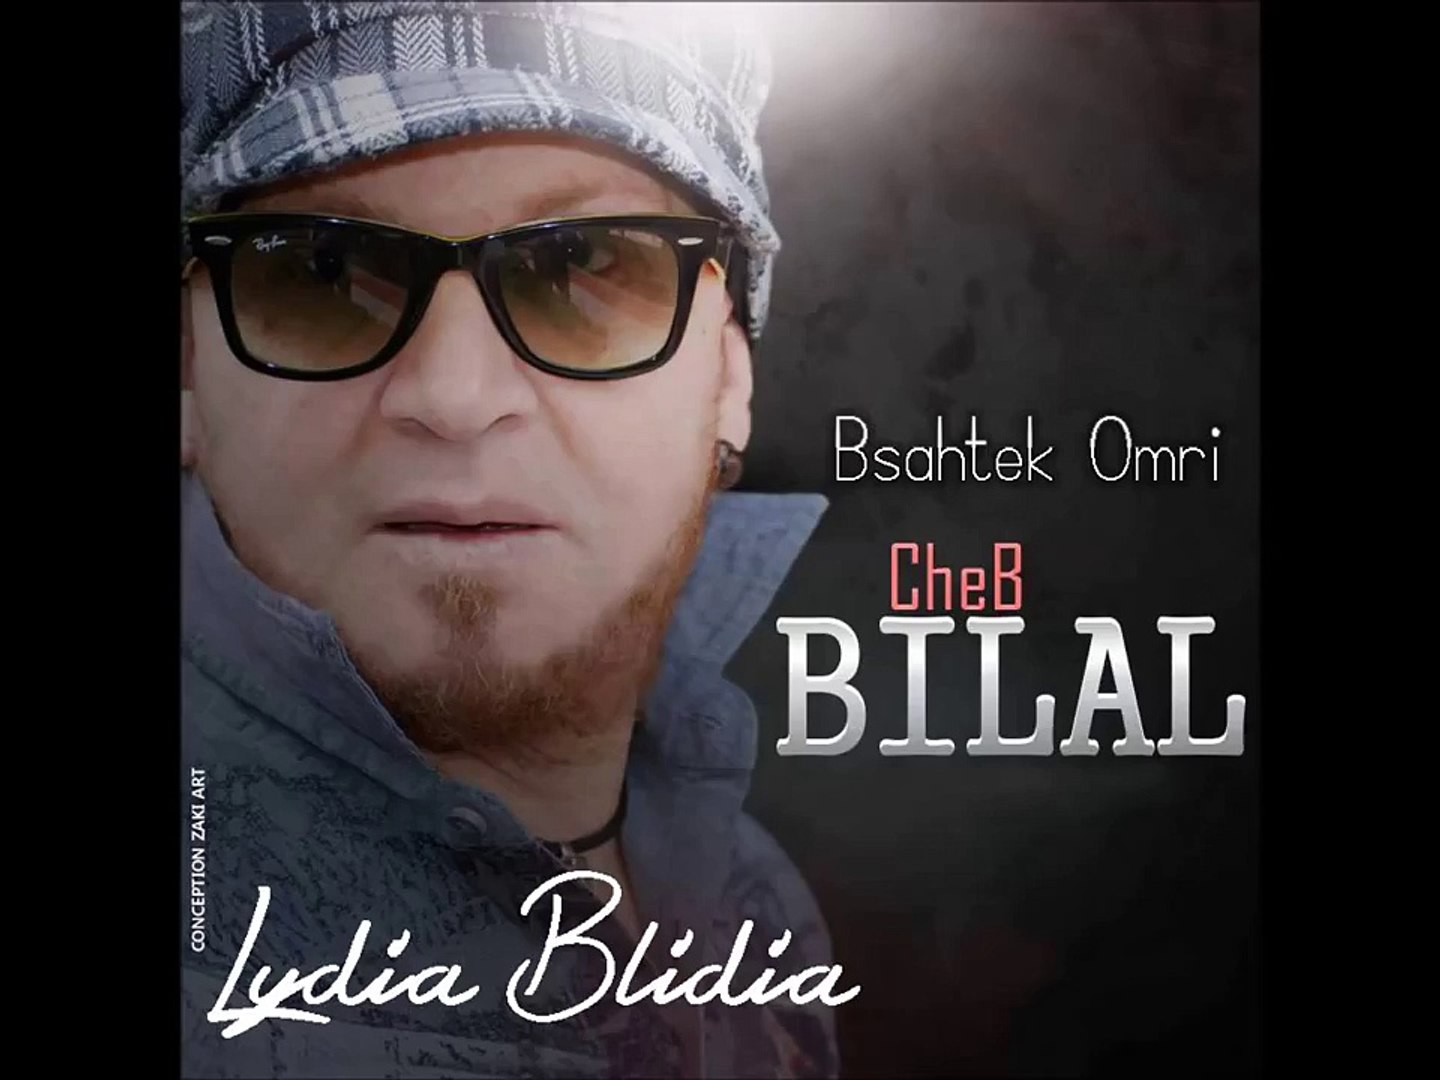 Cheb Bilal 2014 Bsahtek Omri El Aachk Jdiide - Vidéo Dailymotion